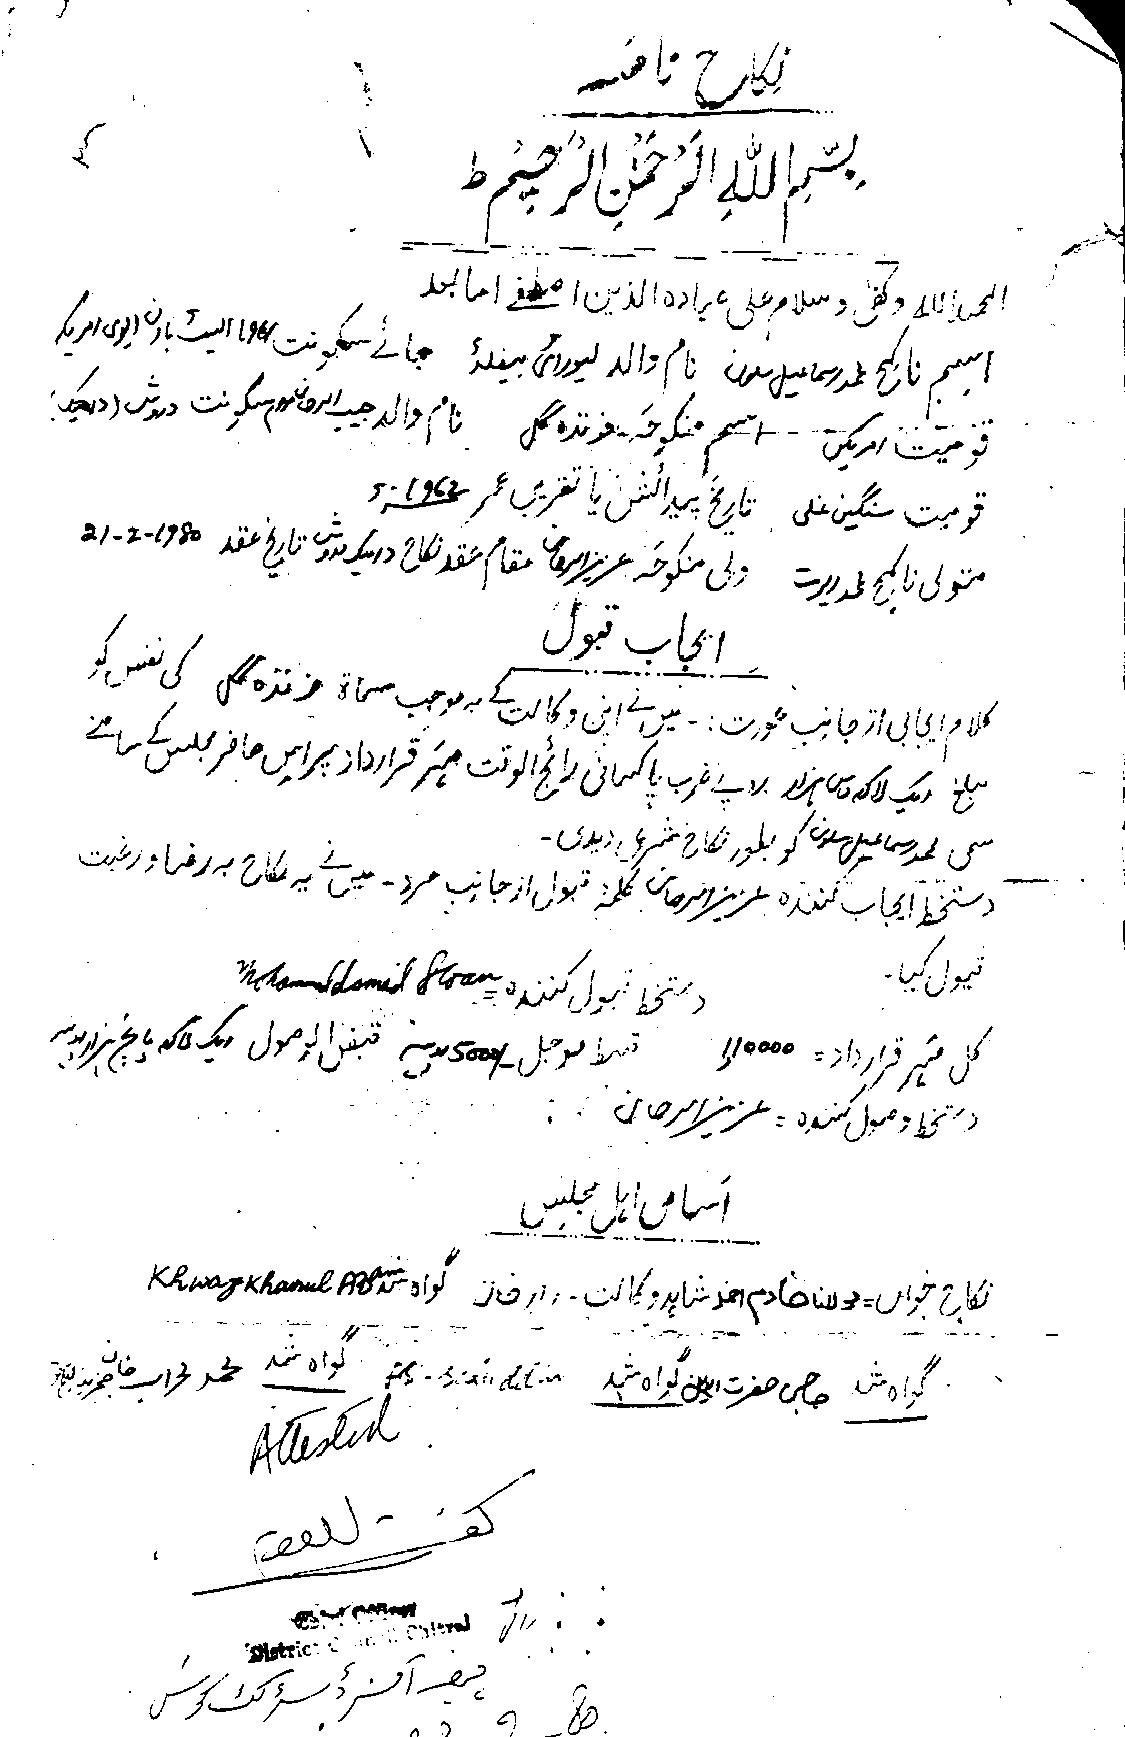 Nikanama, or Marriage Certificate, between Ismail Sloan and Honzagool